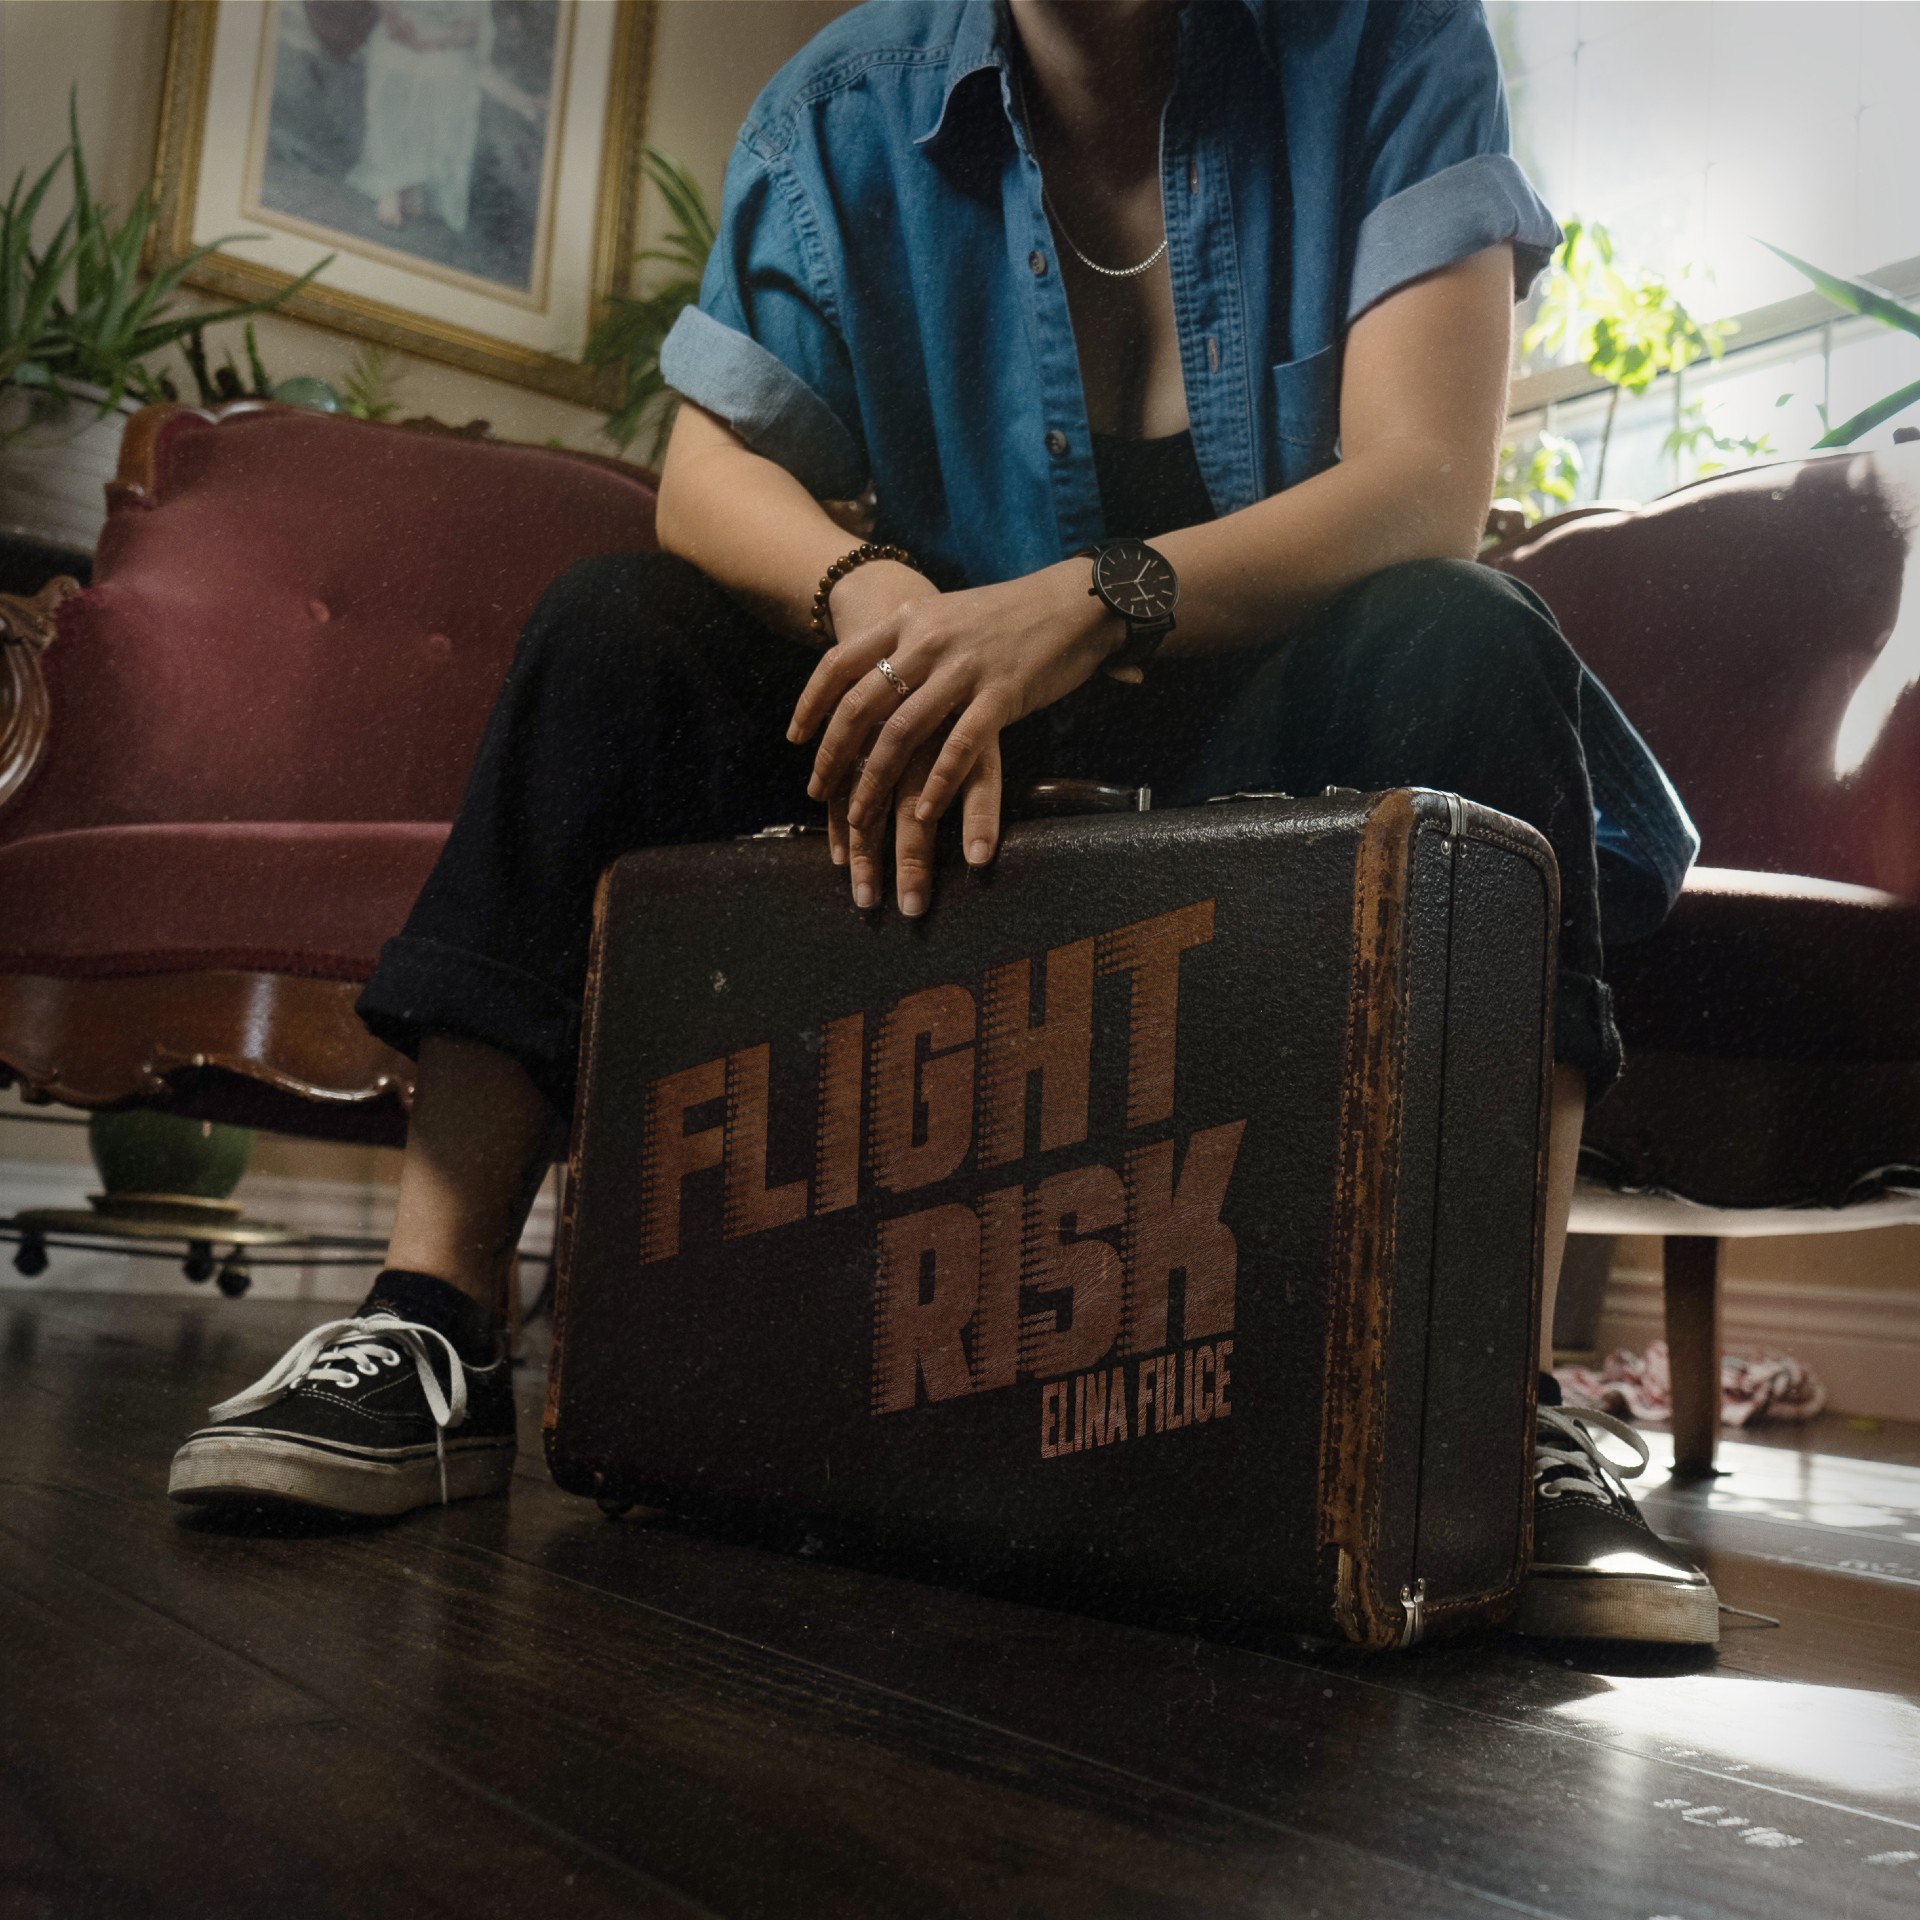 Elina Filice ‘Flight Risk’ EP album artwork